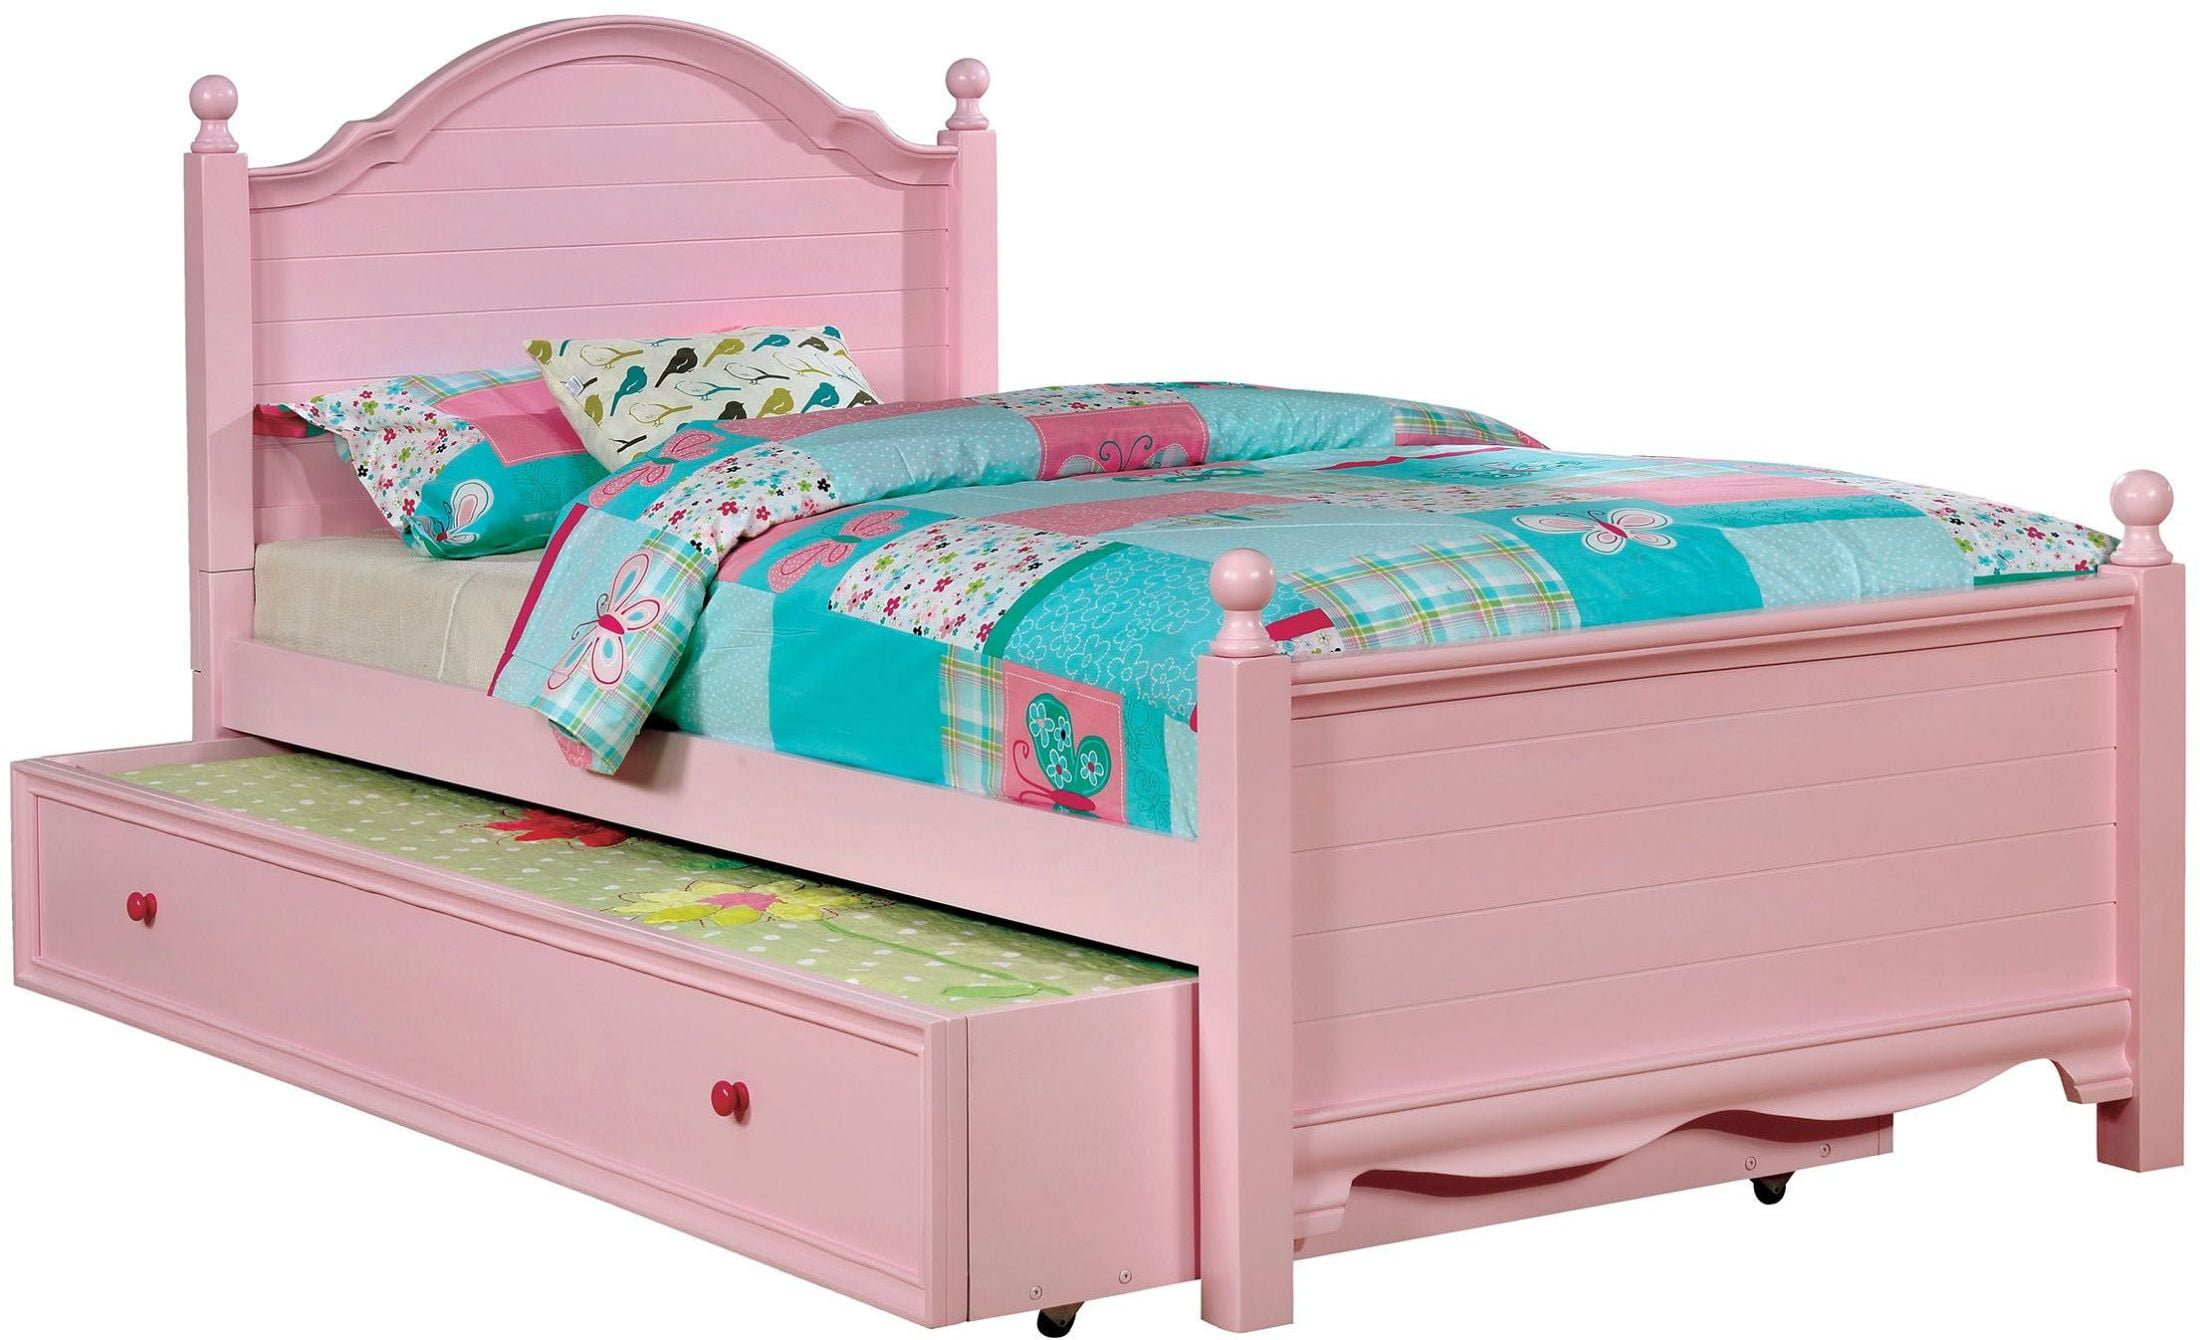 Dani Pink Twin Storage Platform Bed, Pink Twin Bed Frame